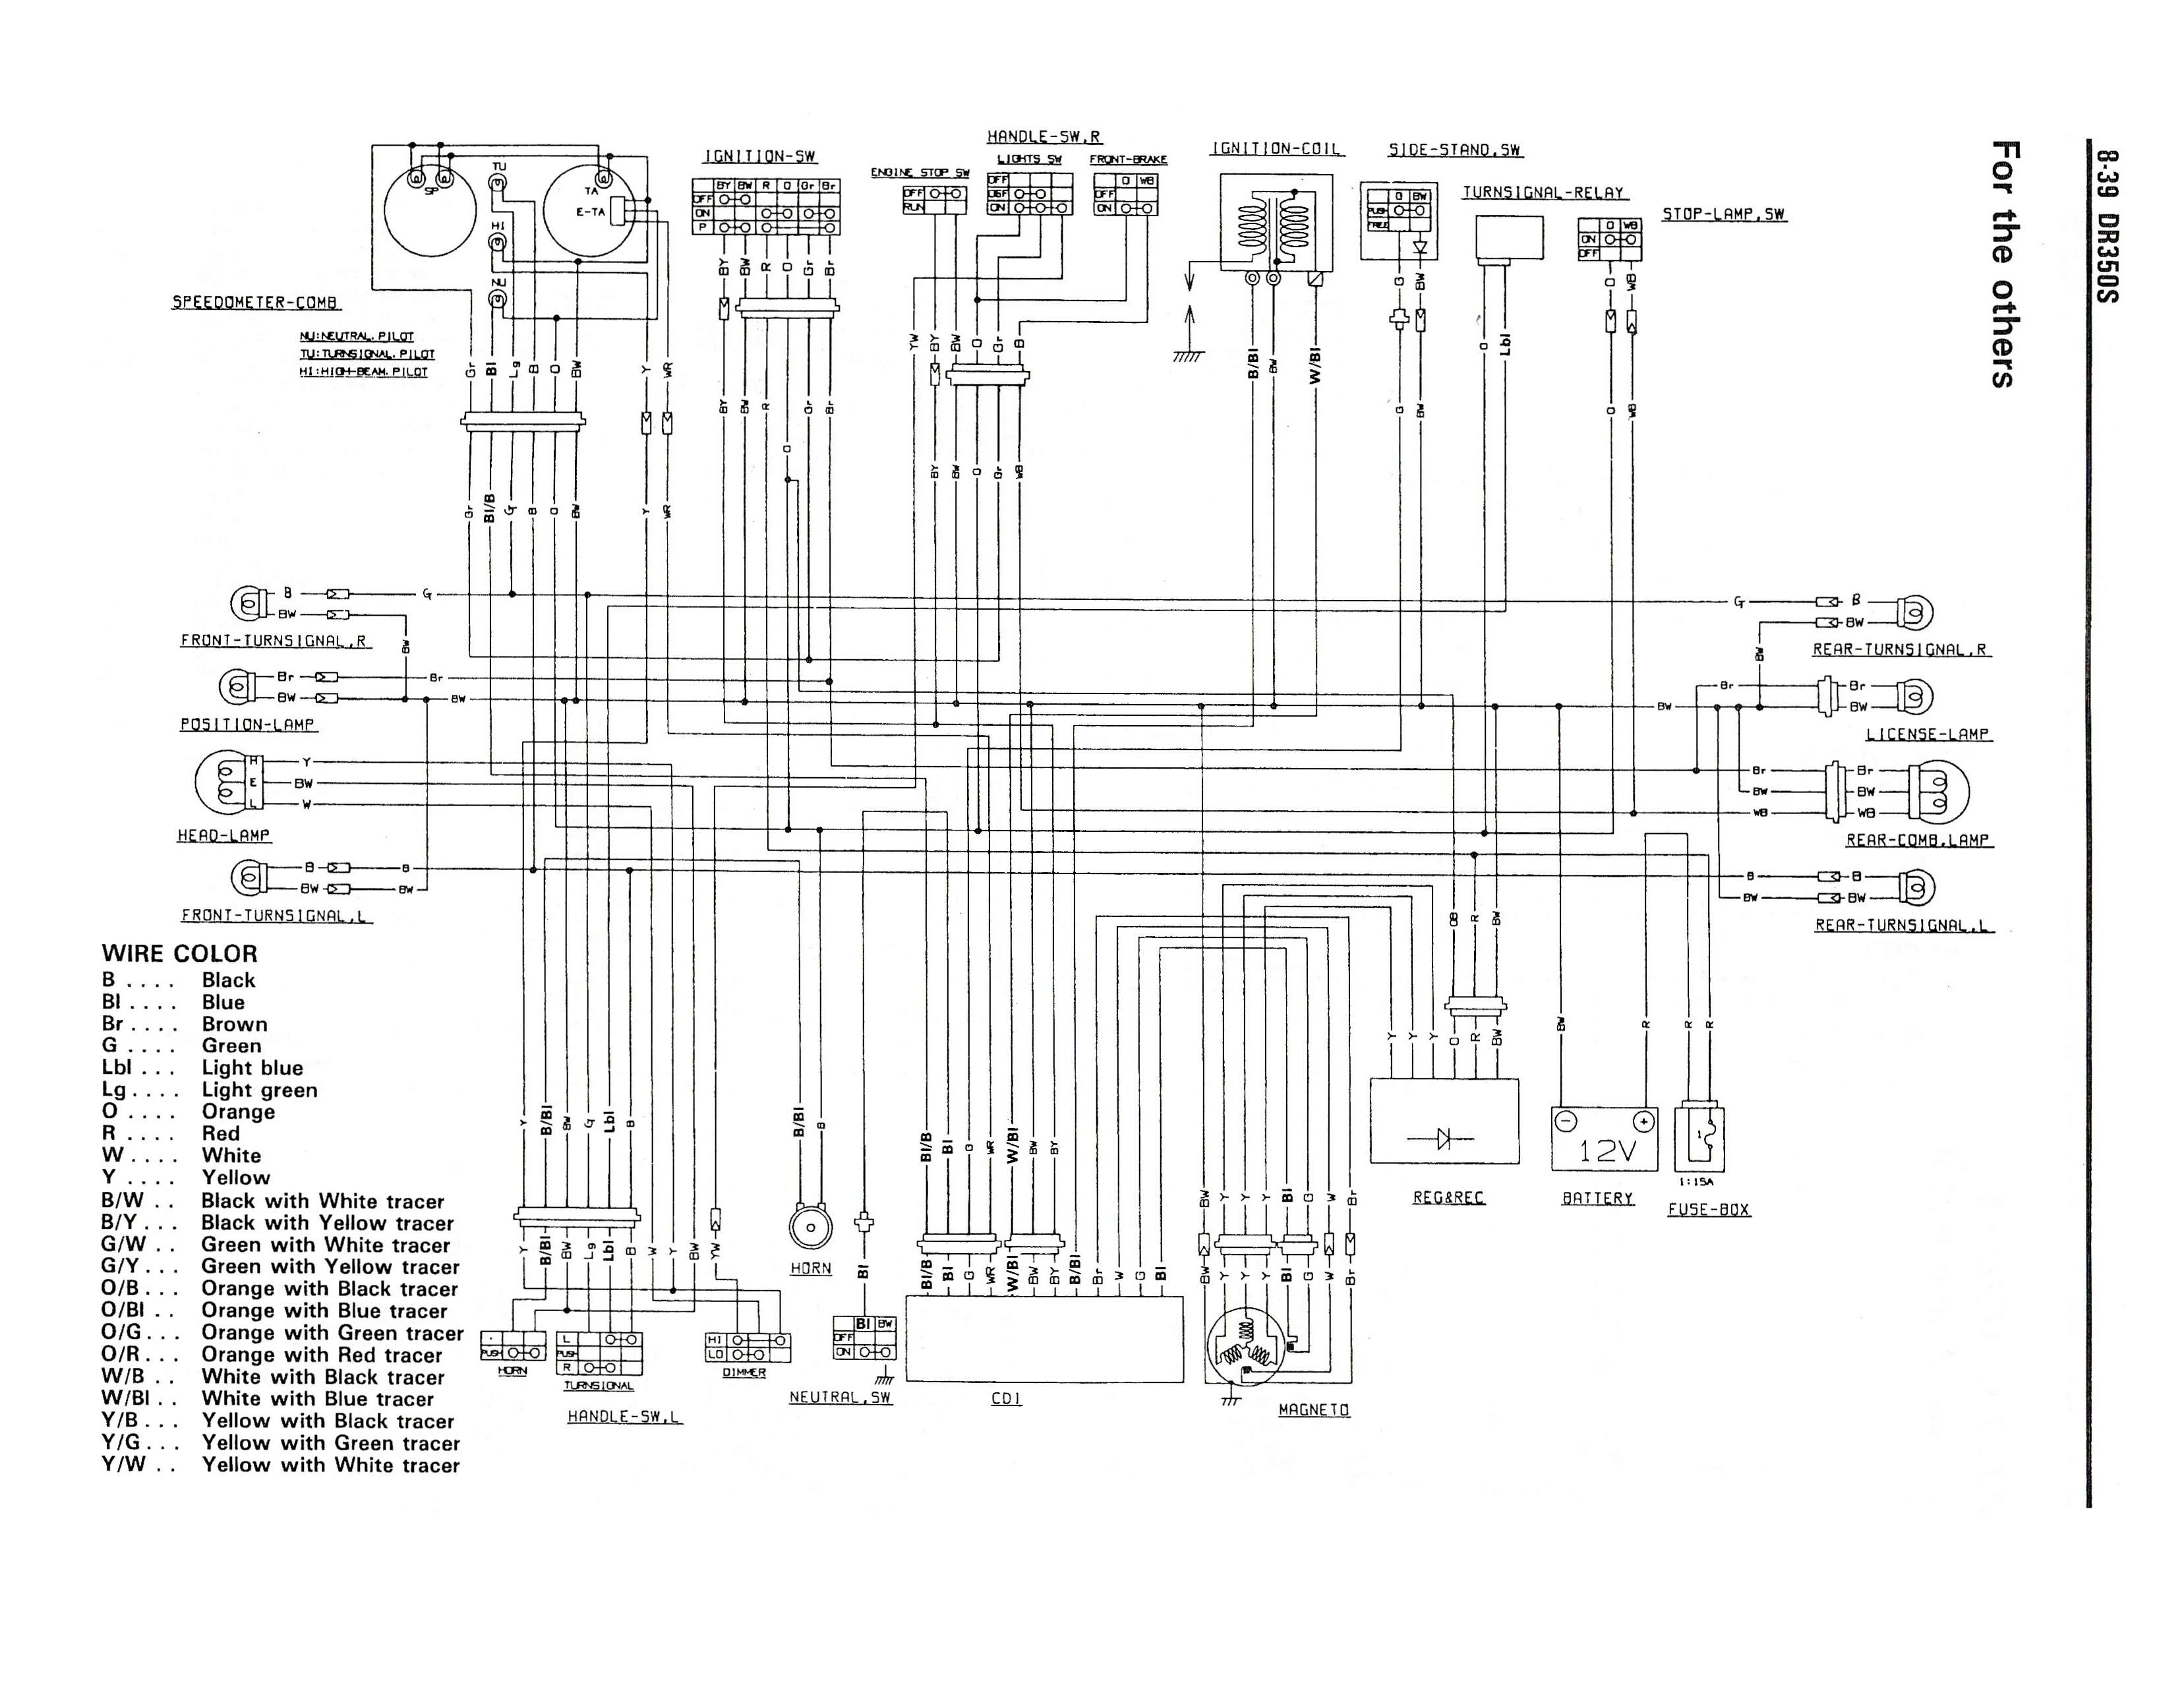 1998 Suzuki Dr350 Wiring Diagram from www.thisoldtractor.com